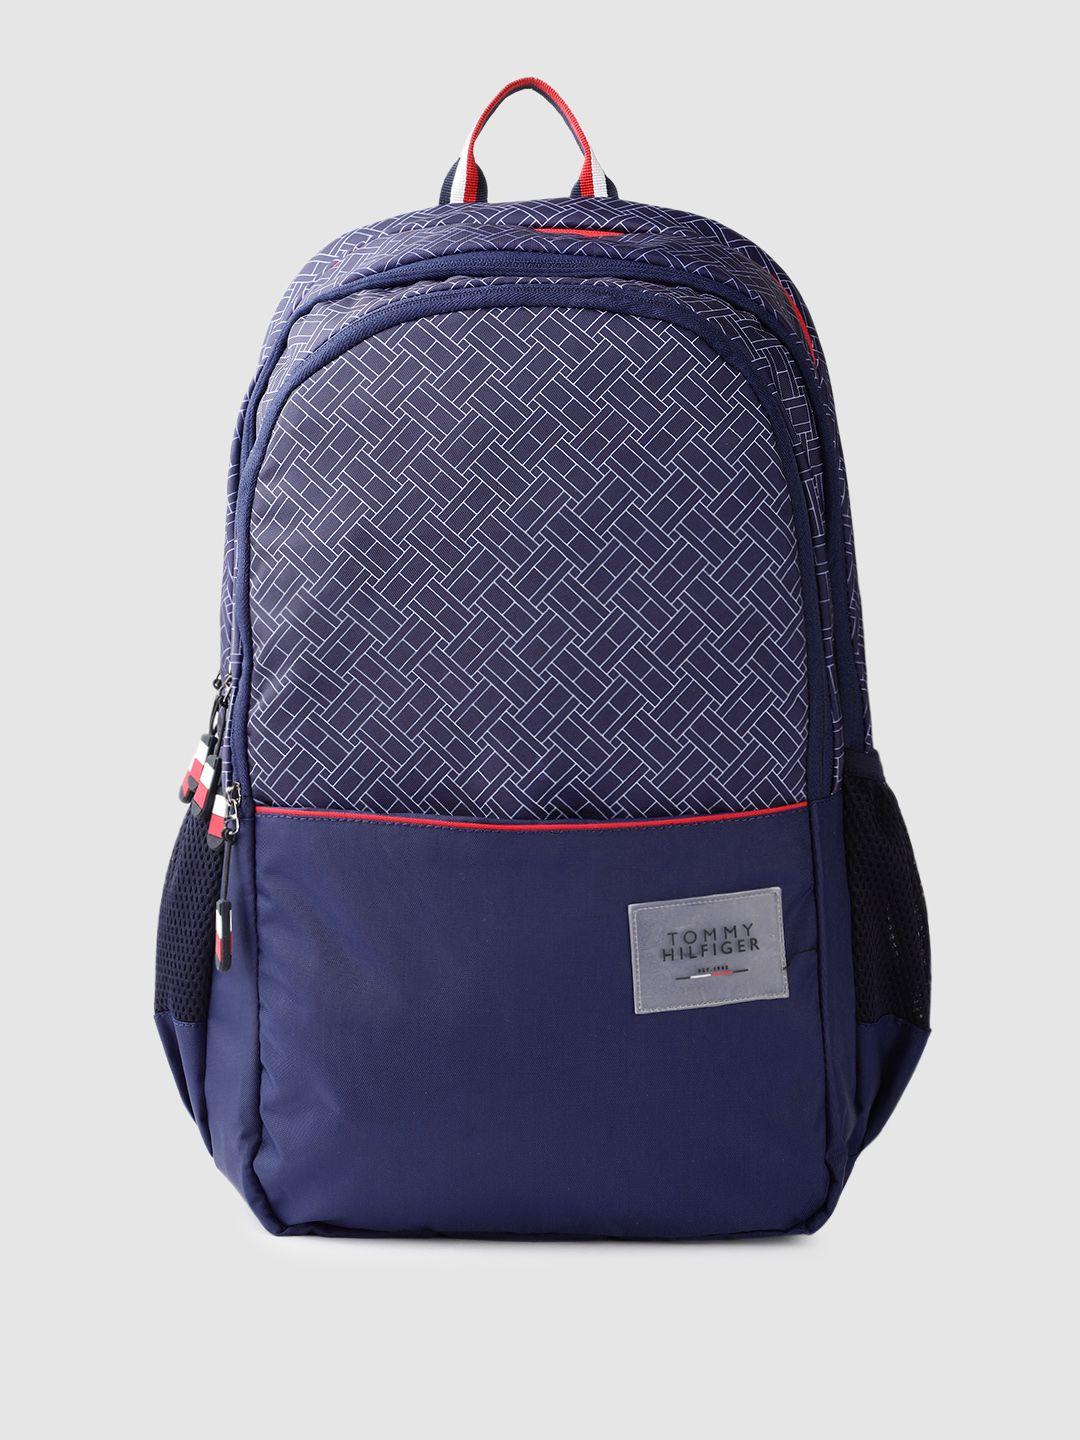 tommy hilfiger unisex navy blue & white brand logo applique detail backpack